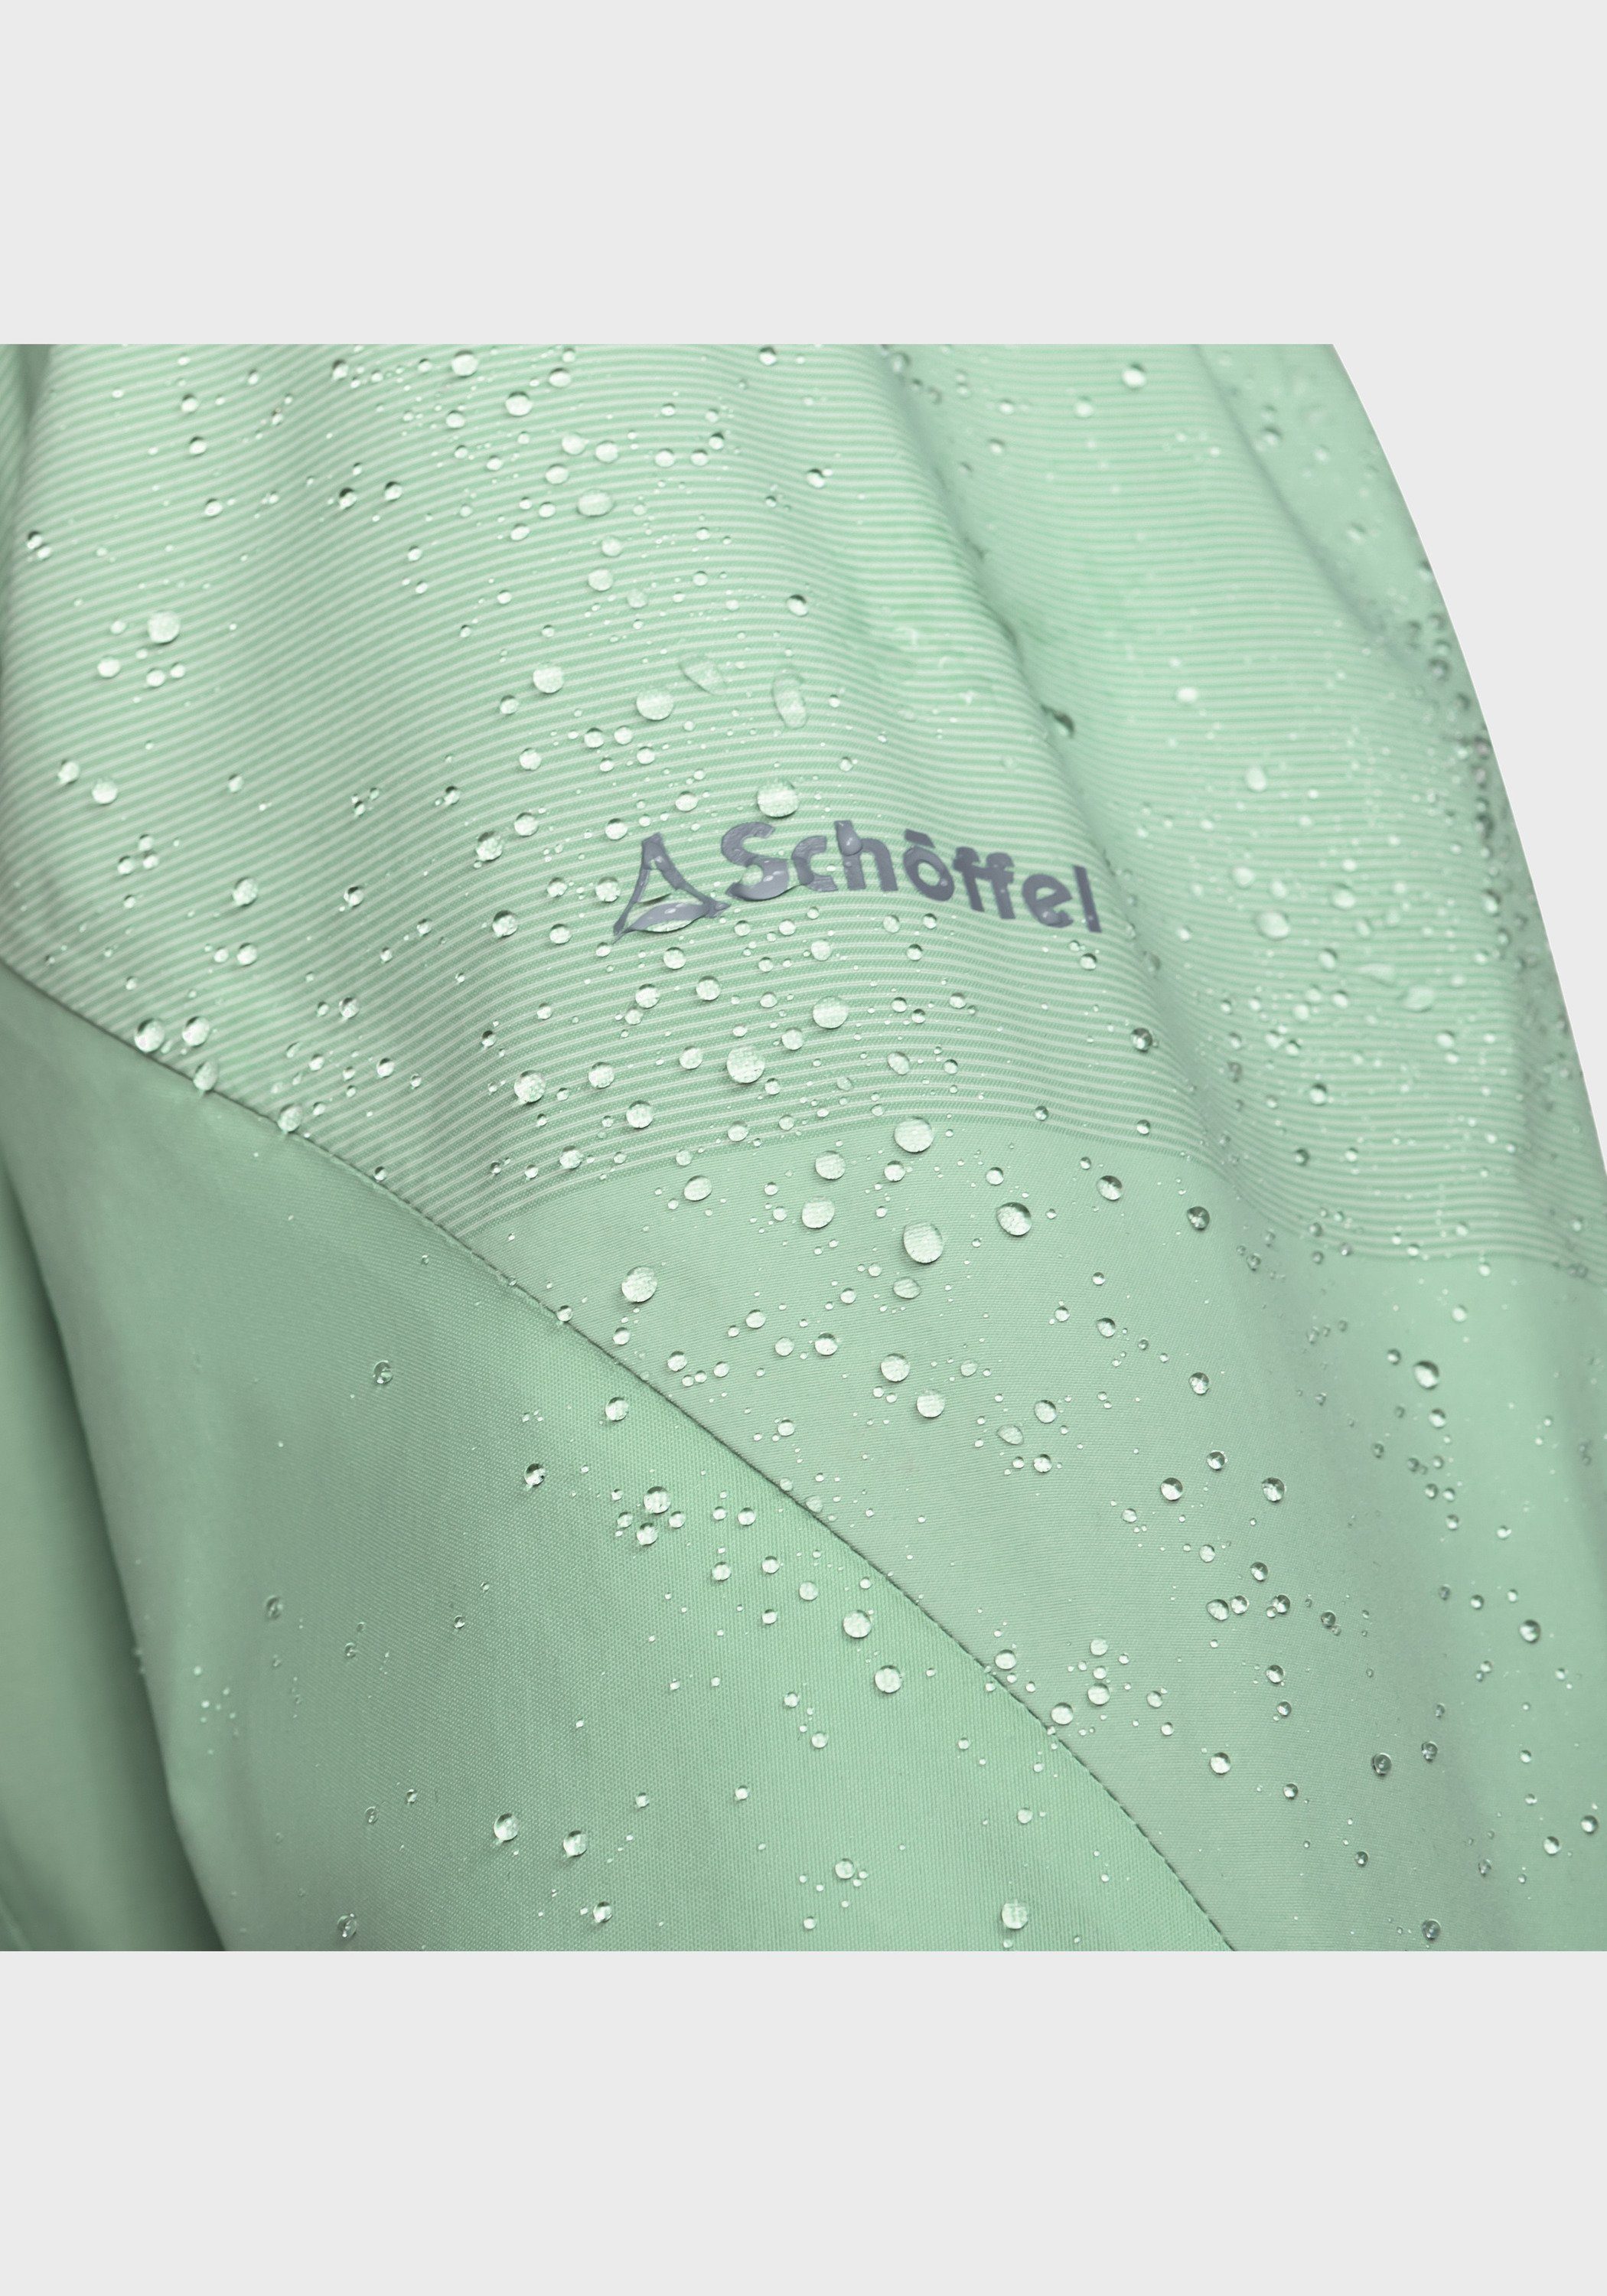 Triigi Schöffel Jacket grün Outdoorjacke 2.5L L